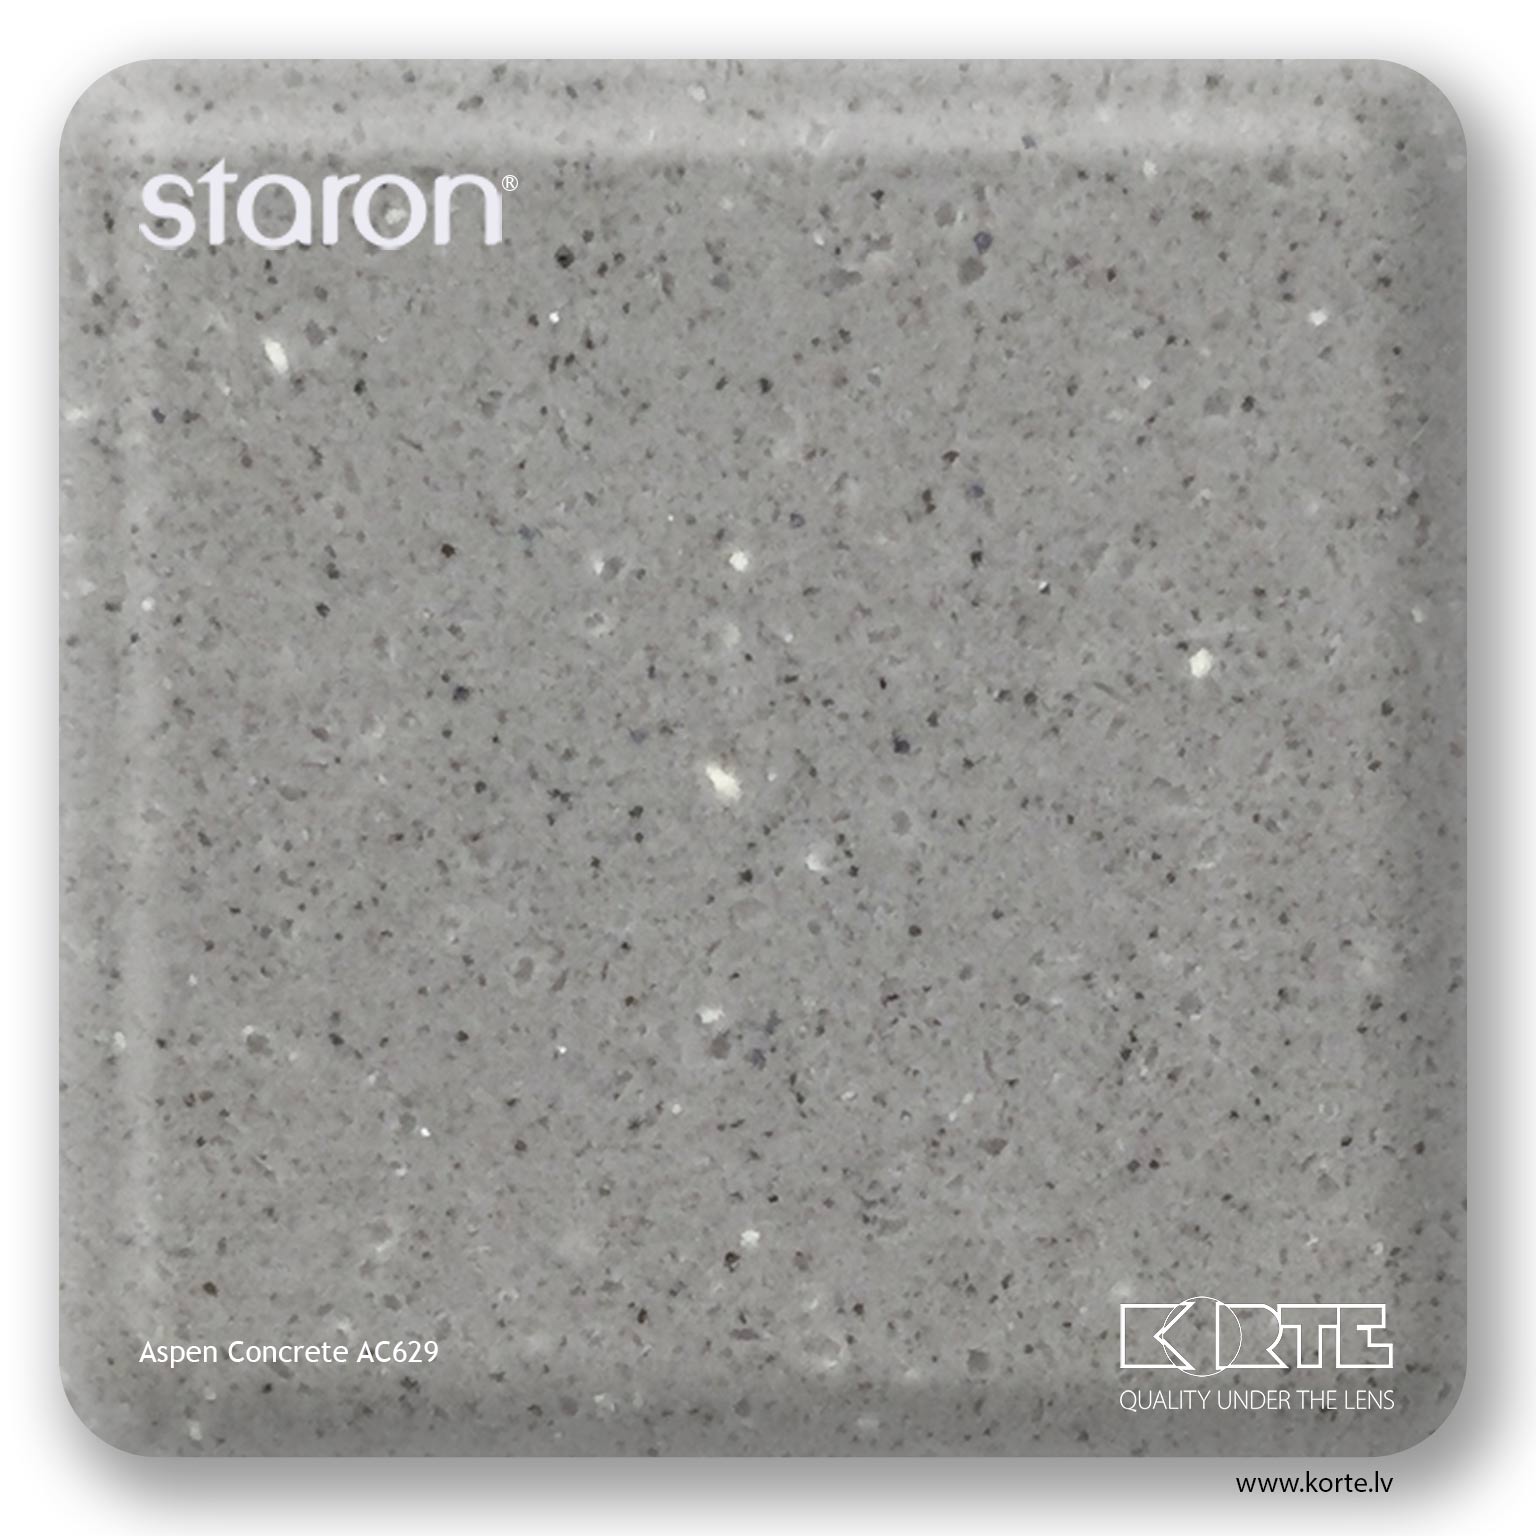 Staron Aspen Concrete AC629